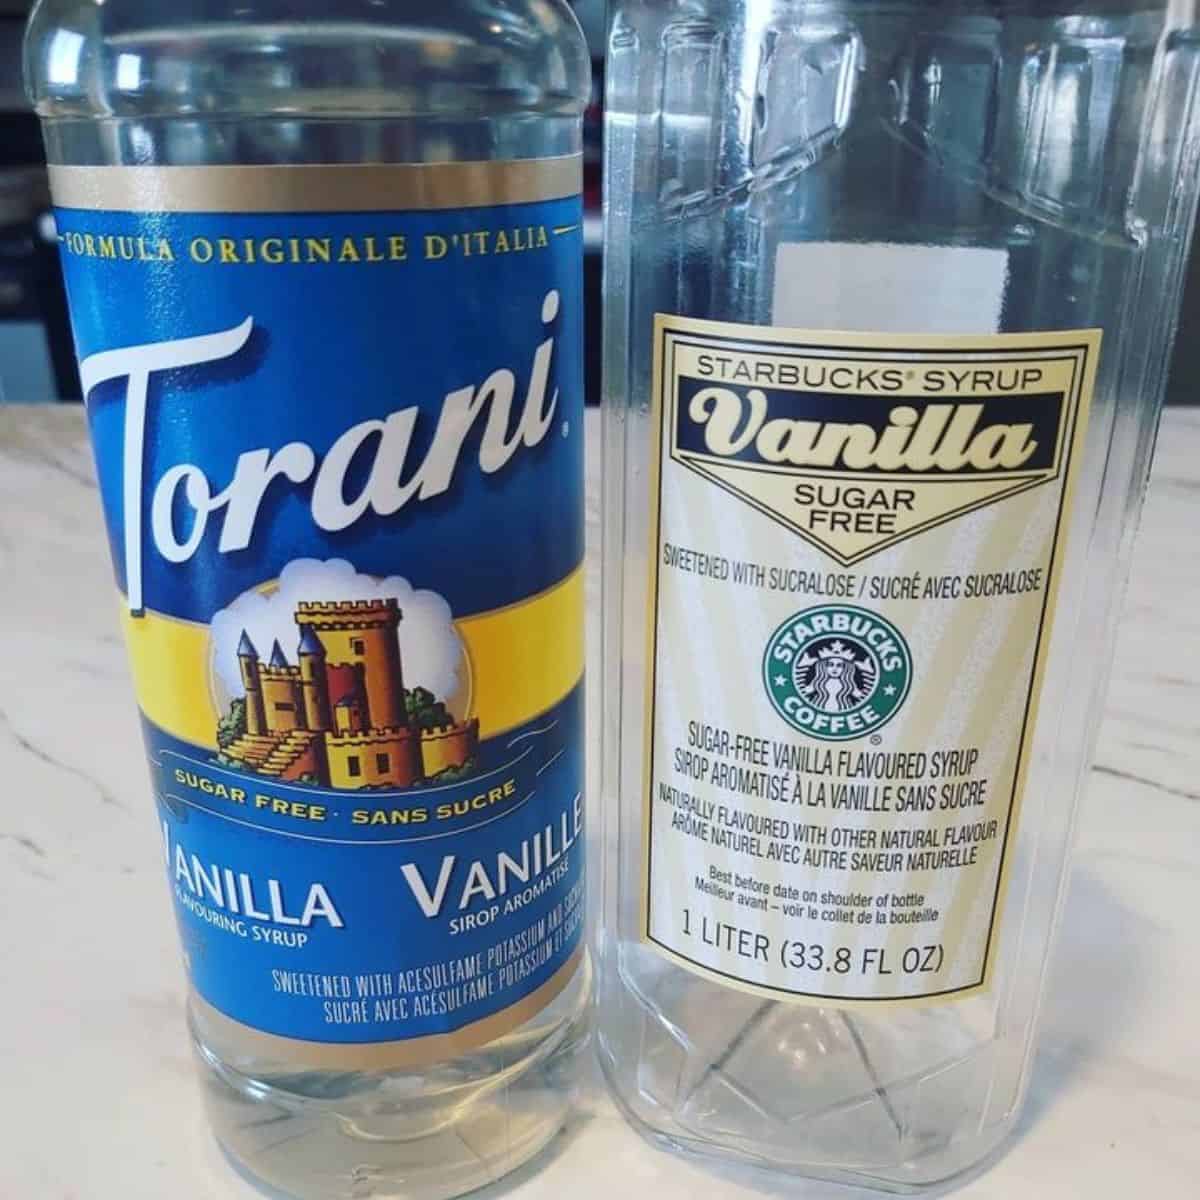 Sugar free vanilla syrup from Torani and Starbucks